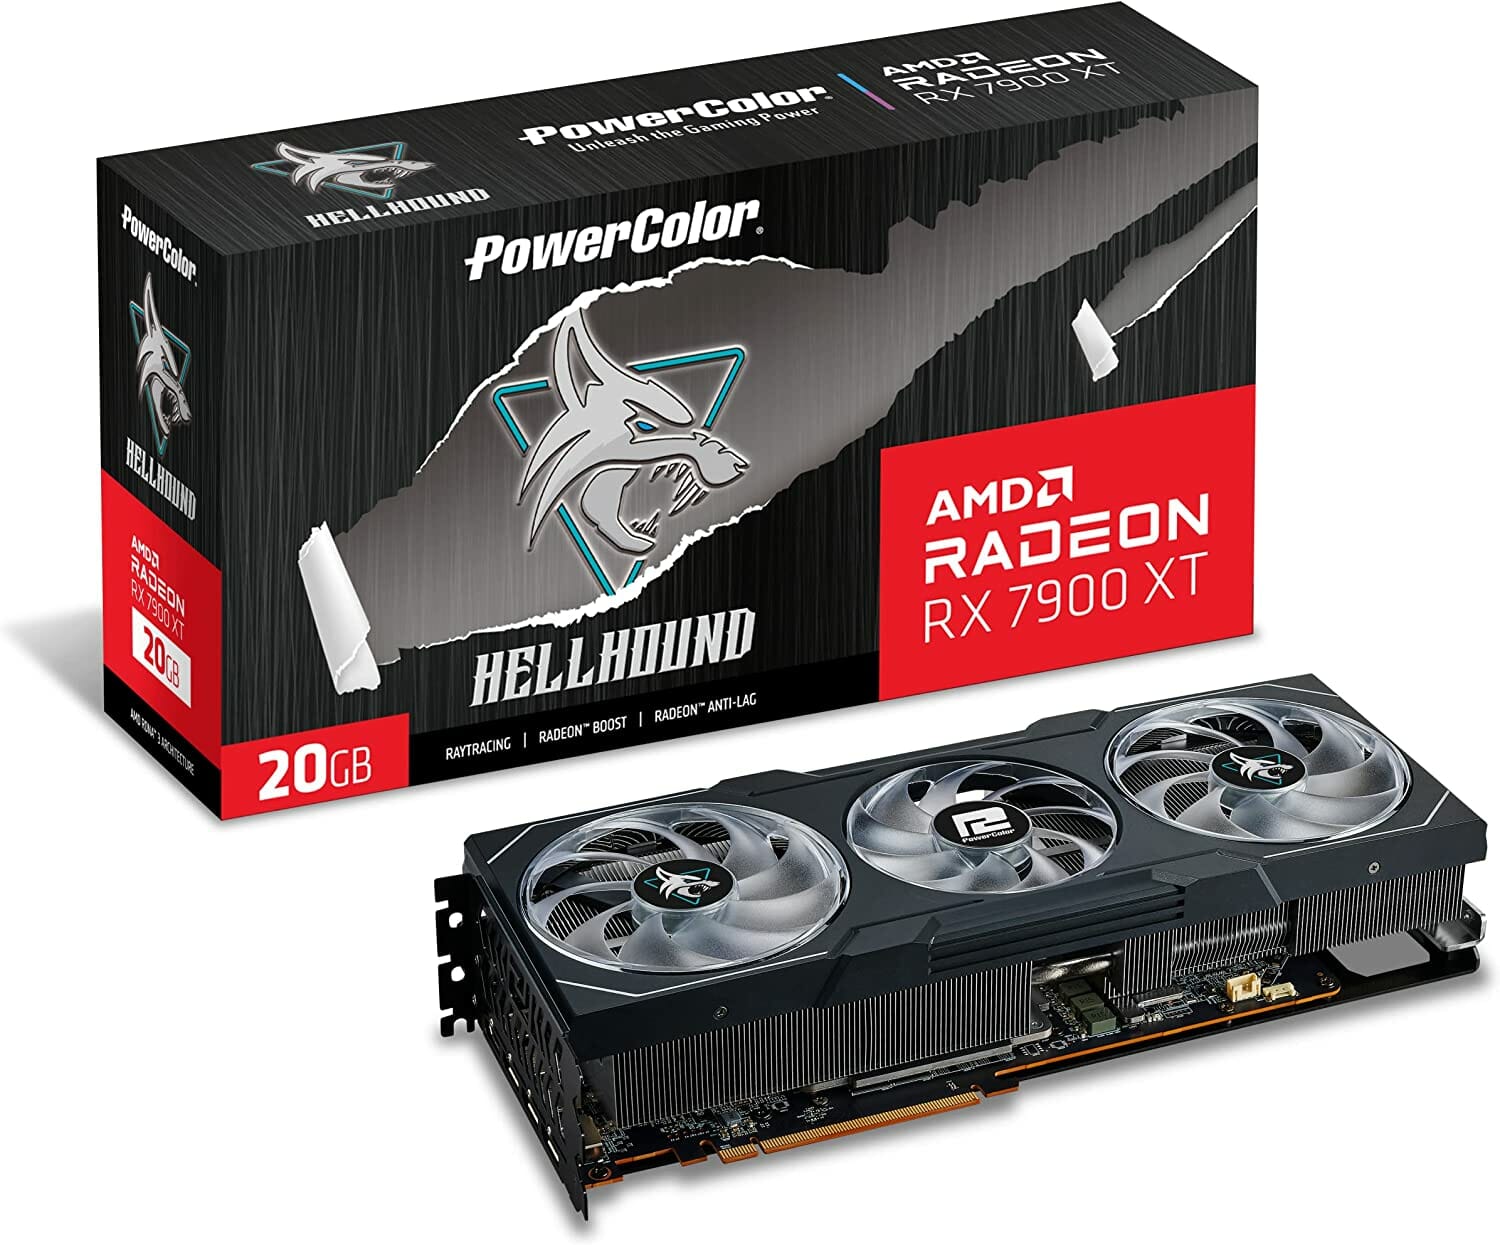 PowerColor Hellhound AMD Radeon RX 7900 XT